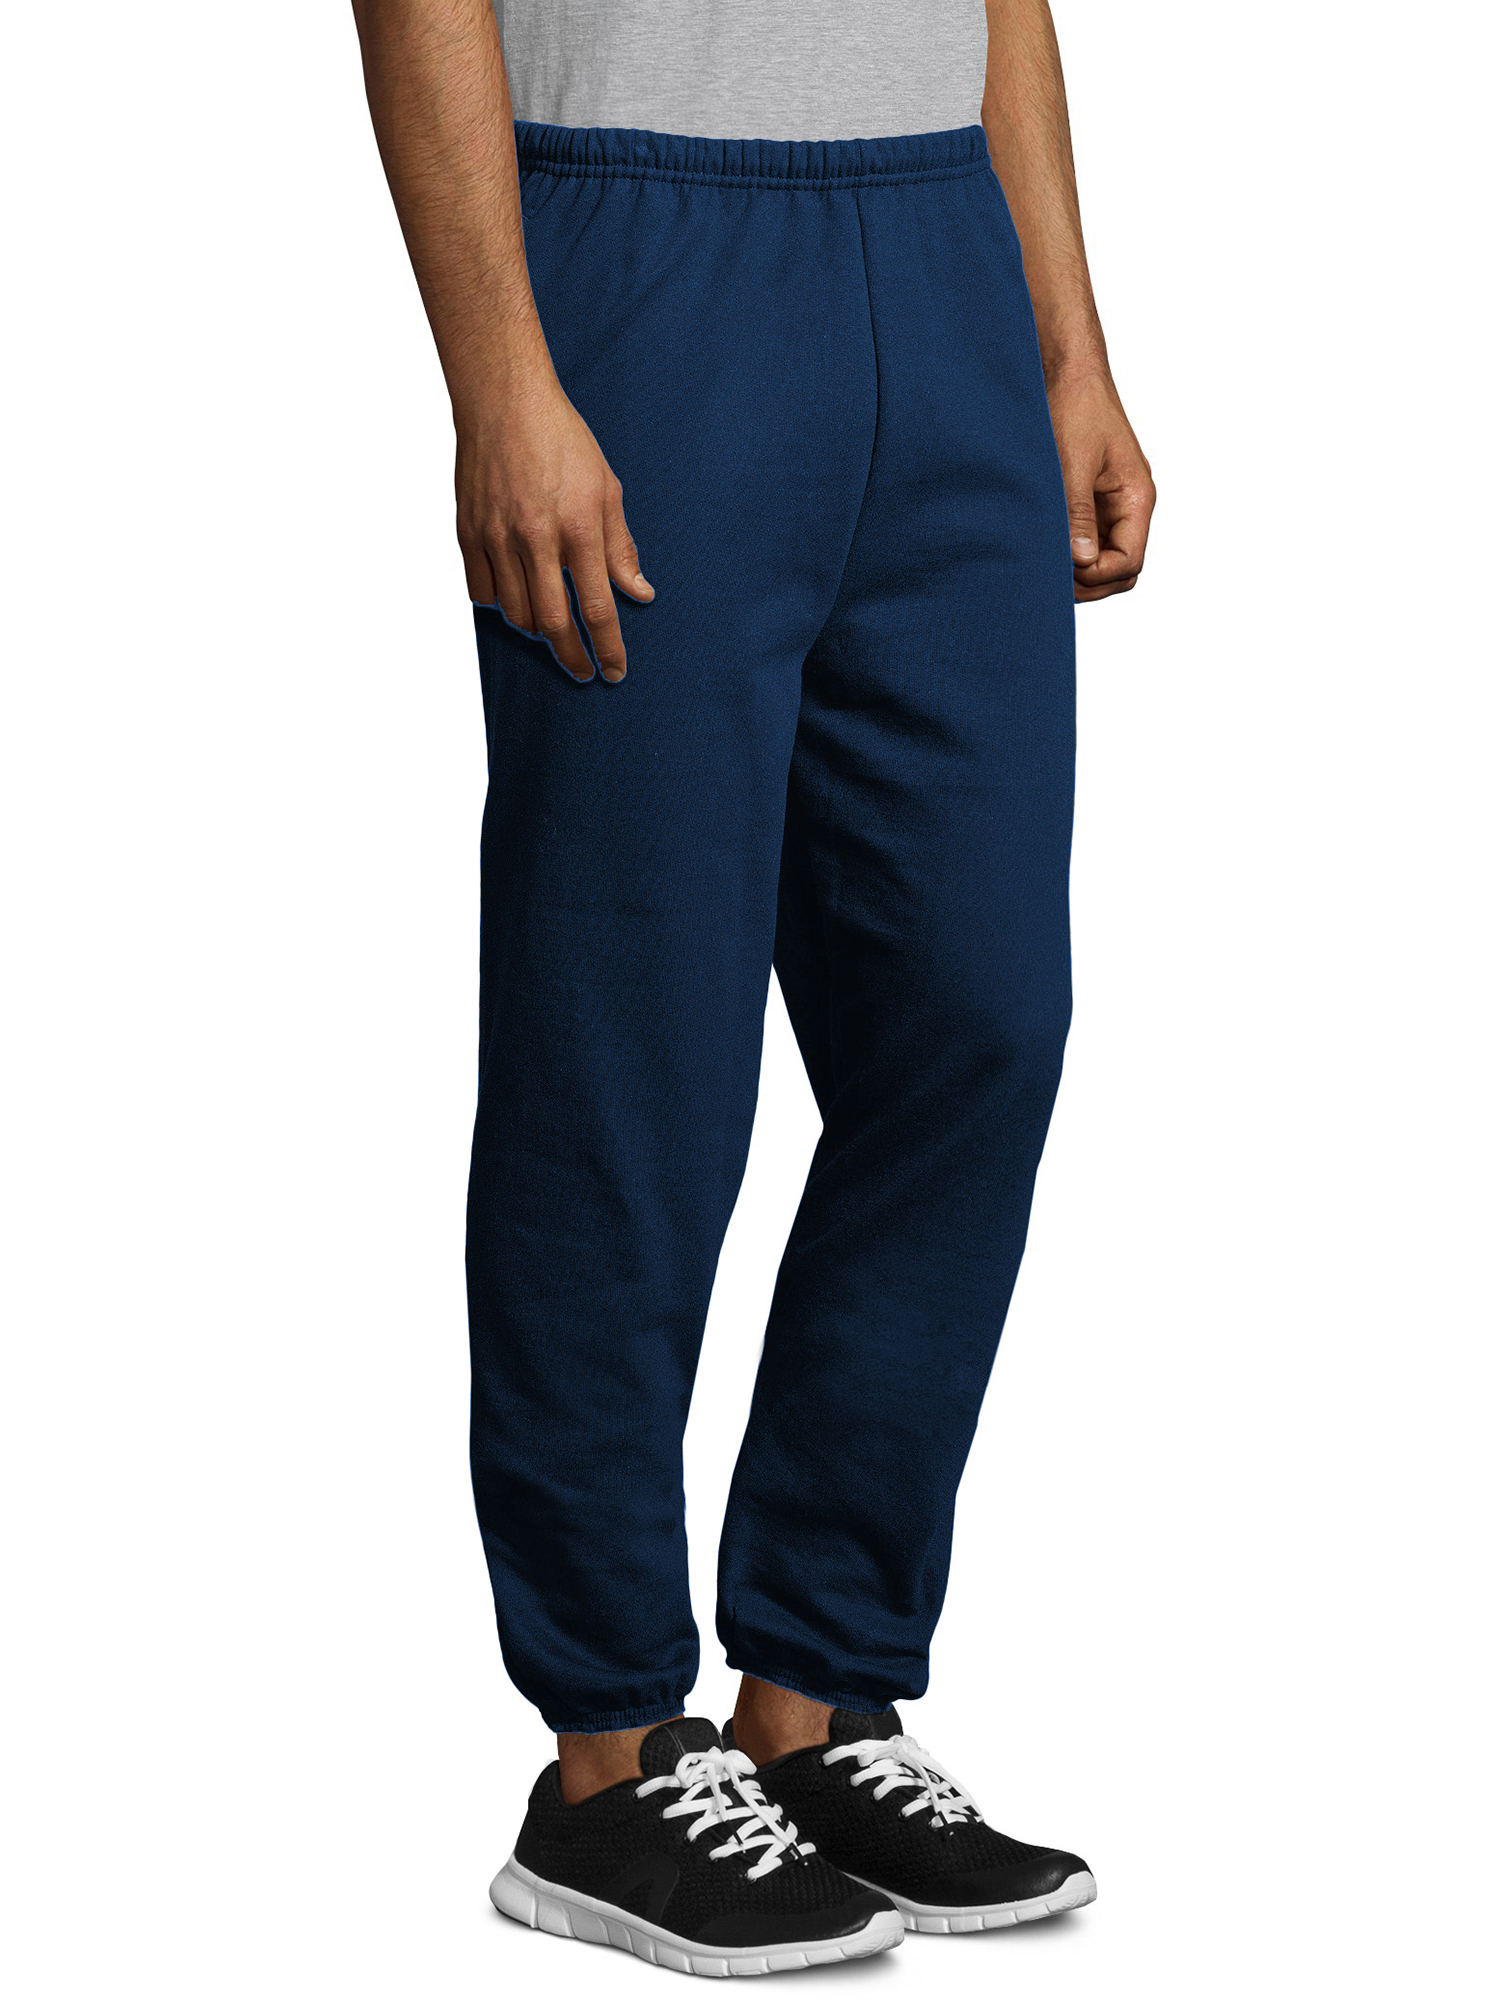 Hanes Sport Men's and Big Men's Ultimate Fleece Sweatpants with Pockets, Sizes S-3XL - image 4 of 5